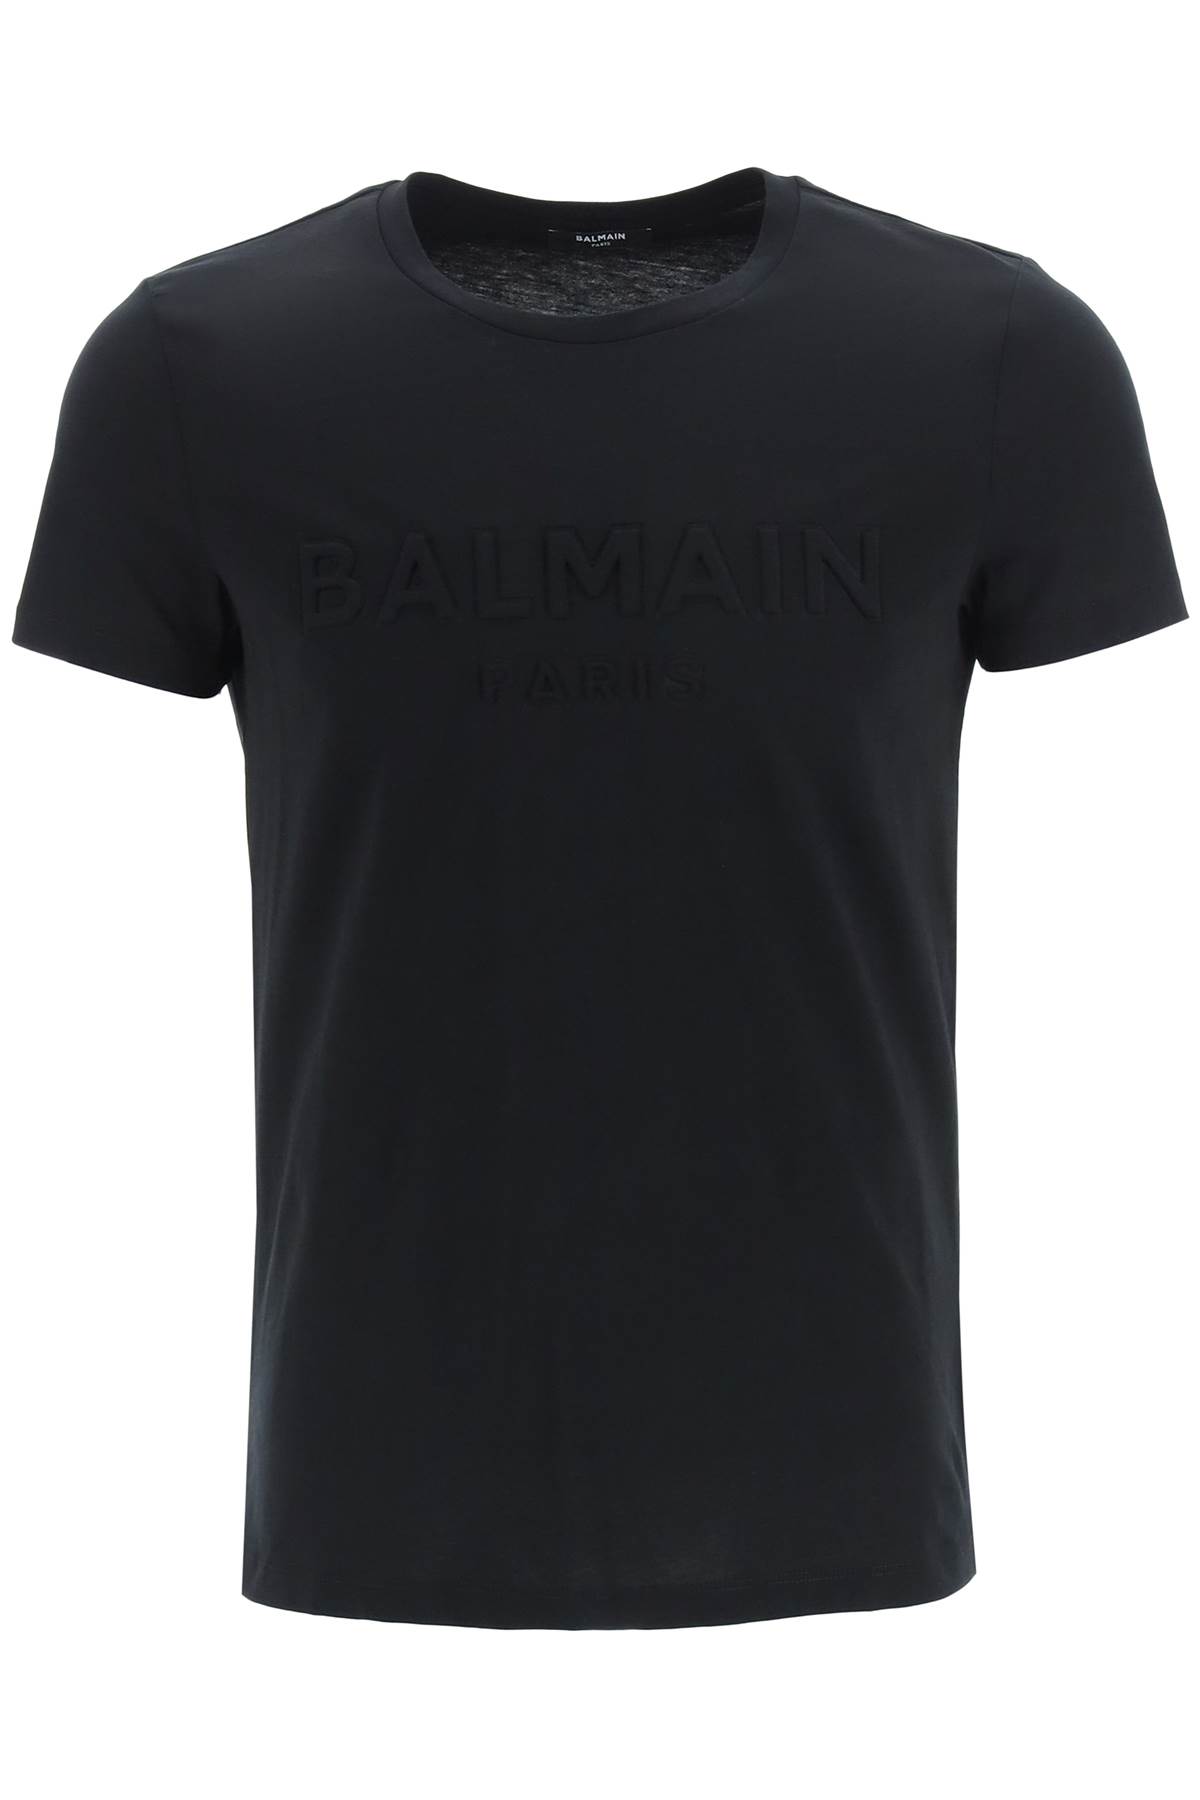 Balmain T-shirt With Embossed Logo